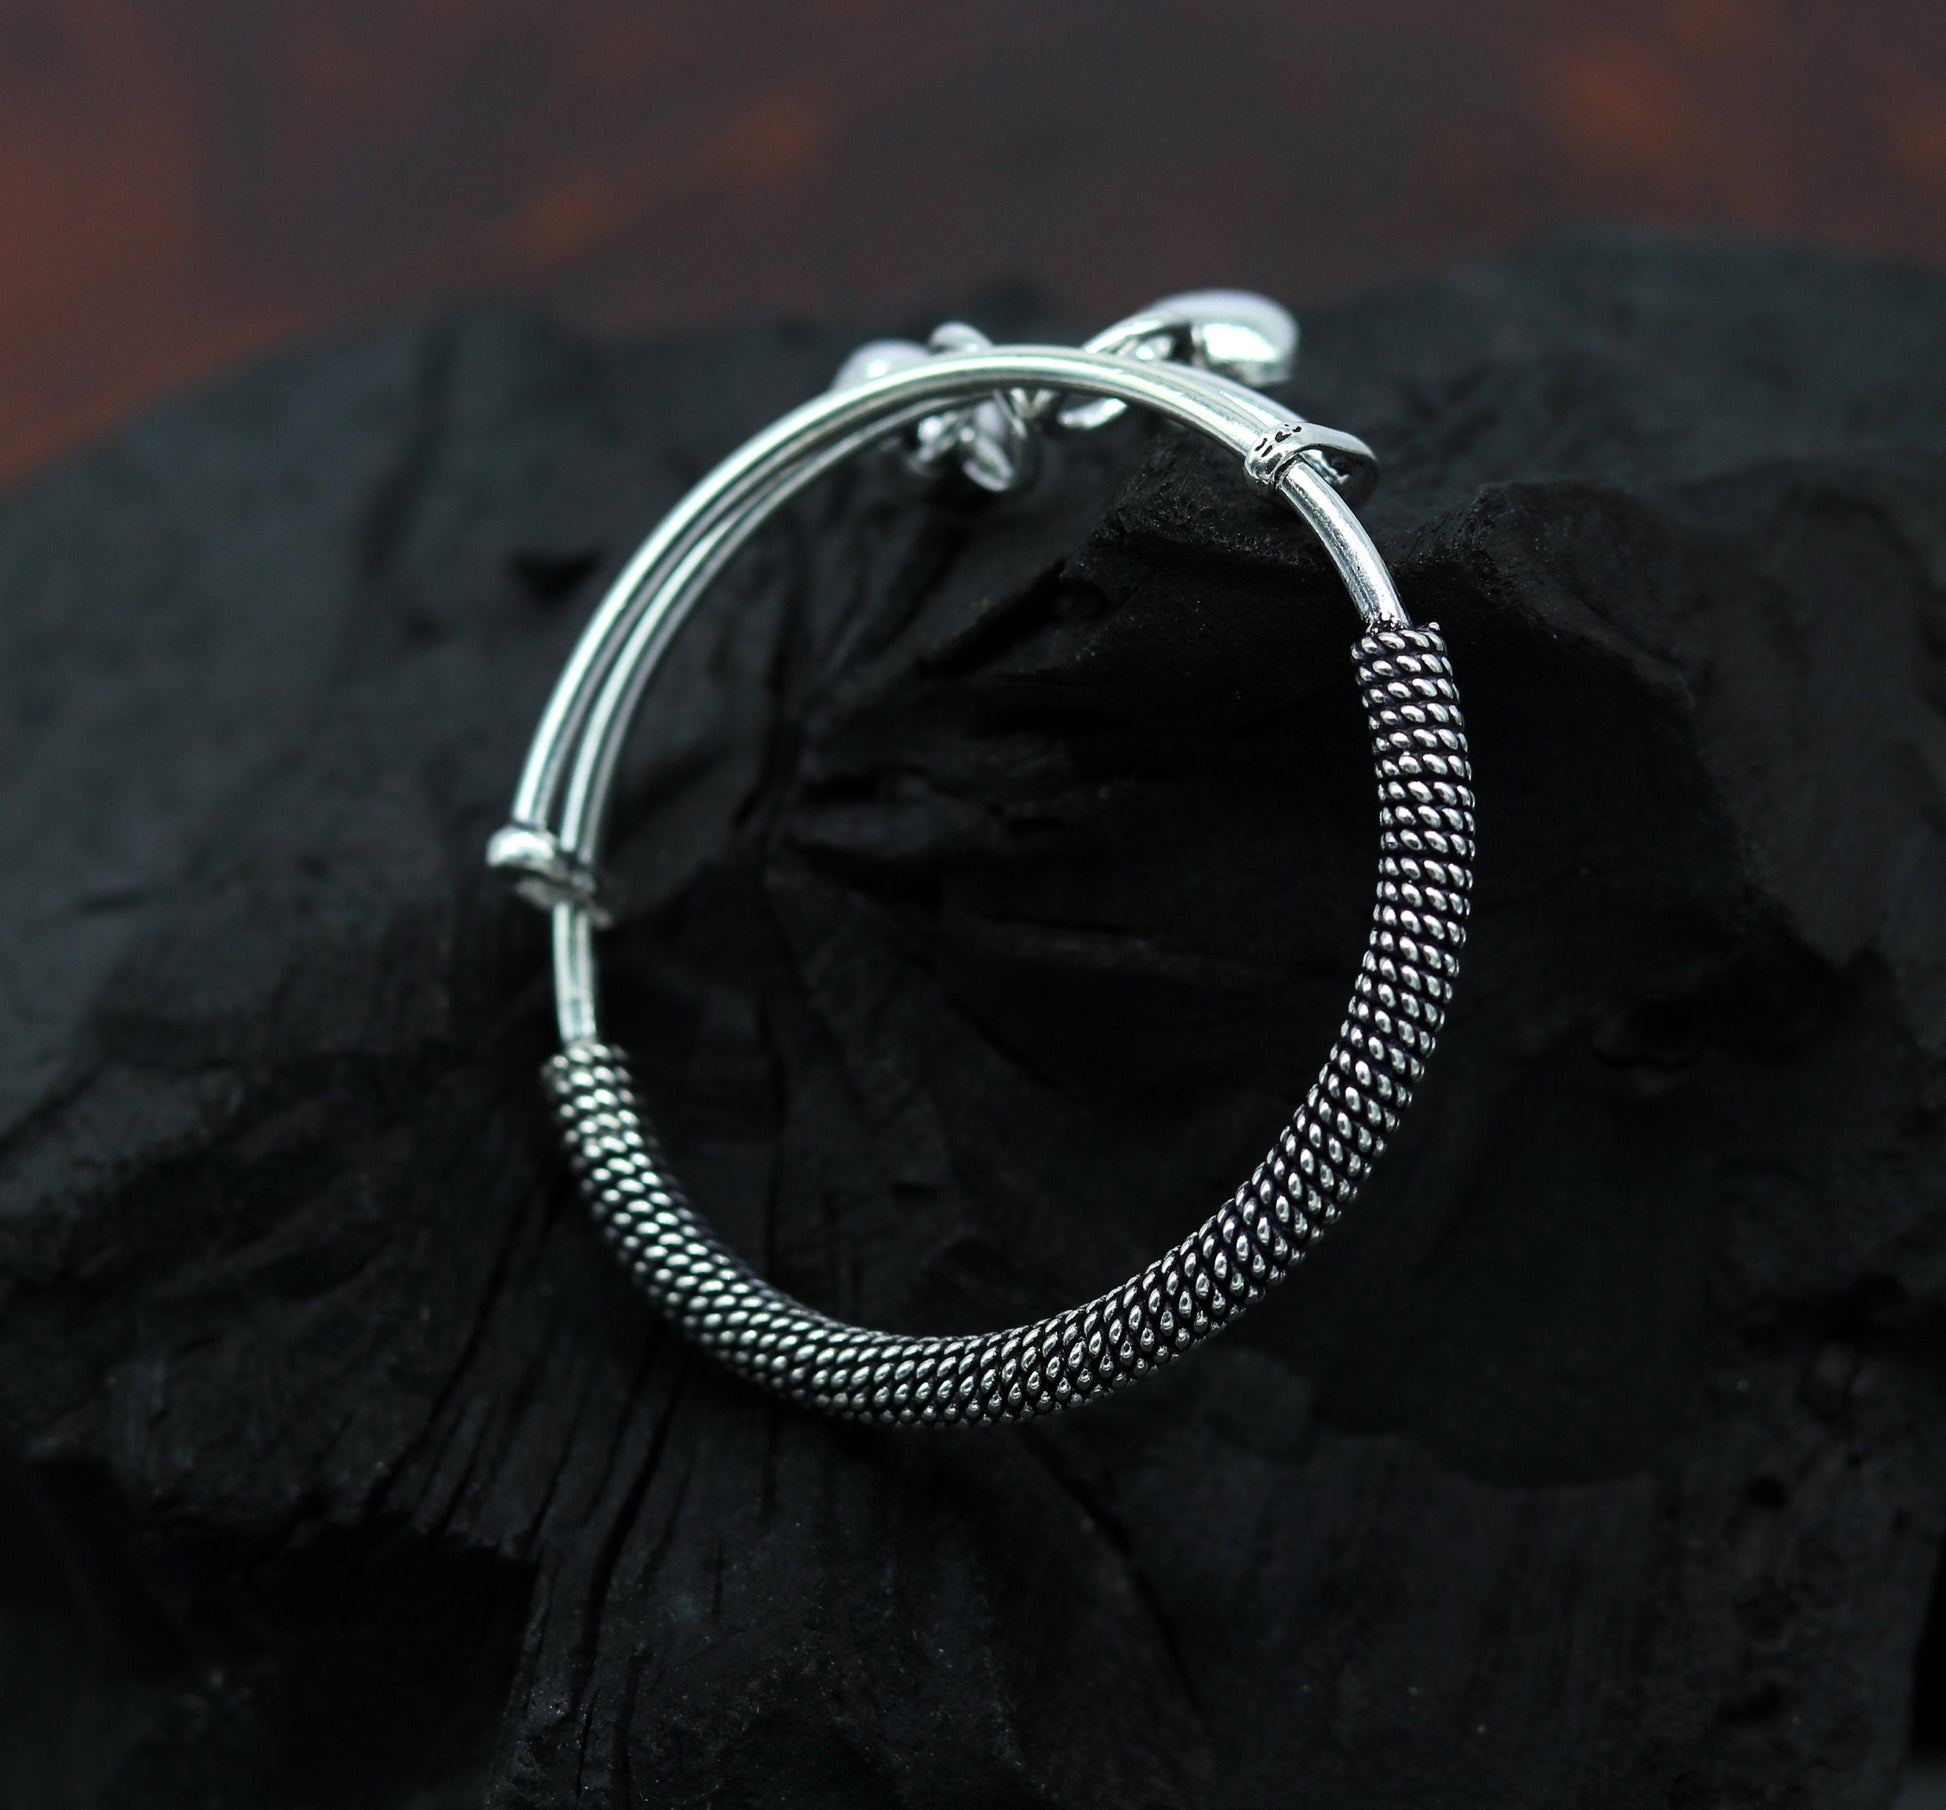 Stylish charm oxidized 925 sterling silver adjustable baby solid bangle bracelet, charm bangle, tribal unisex kids jewelry bbk84 - TRIBAL ORNAMENTS